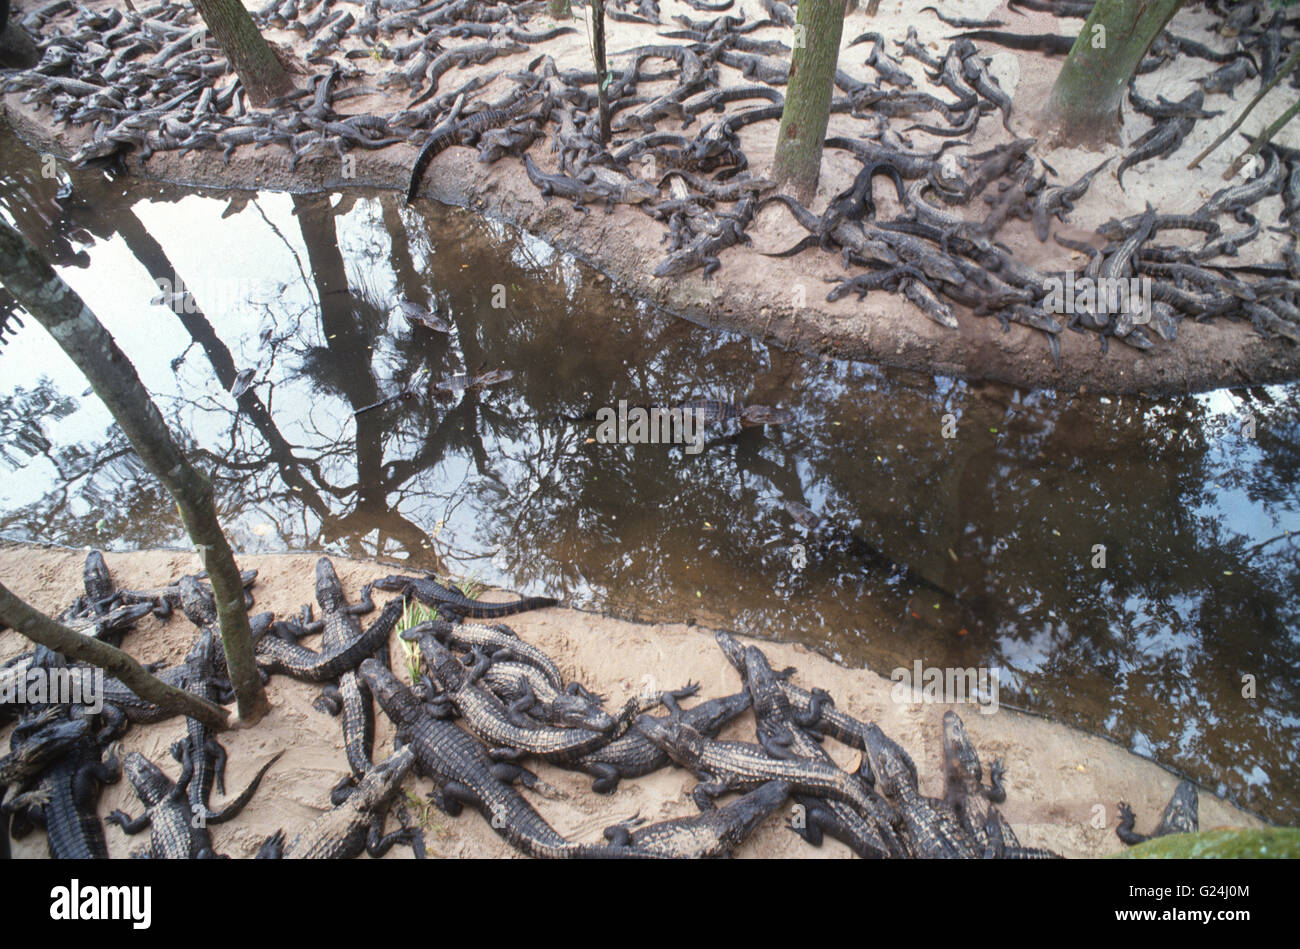 Baby Alligators at Aligator farm in St Augustine Florida. Stock Photo